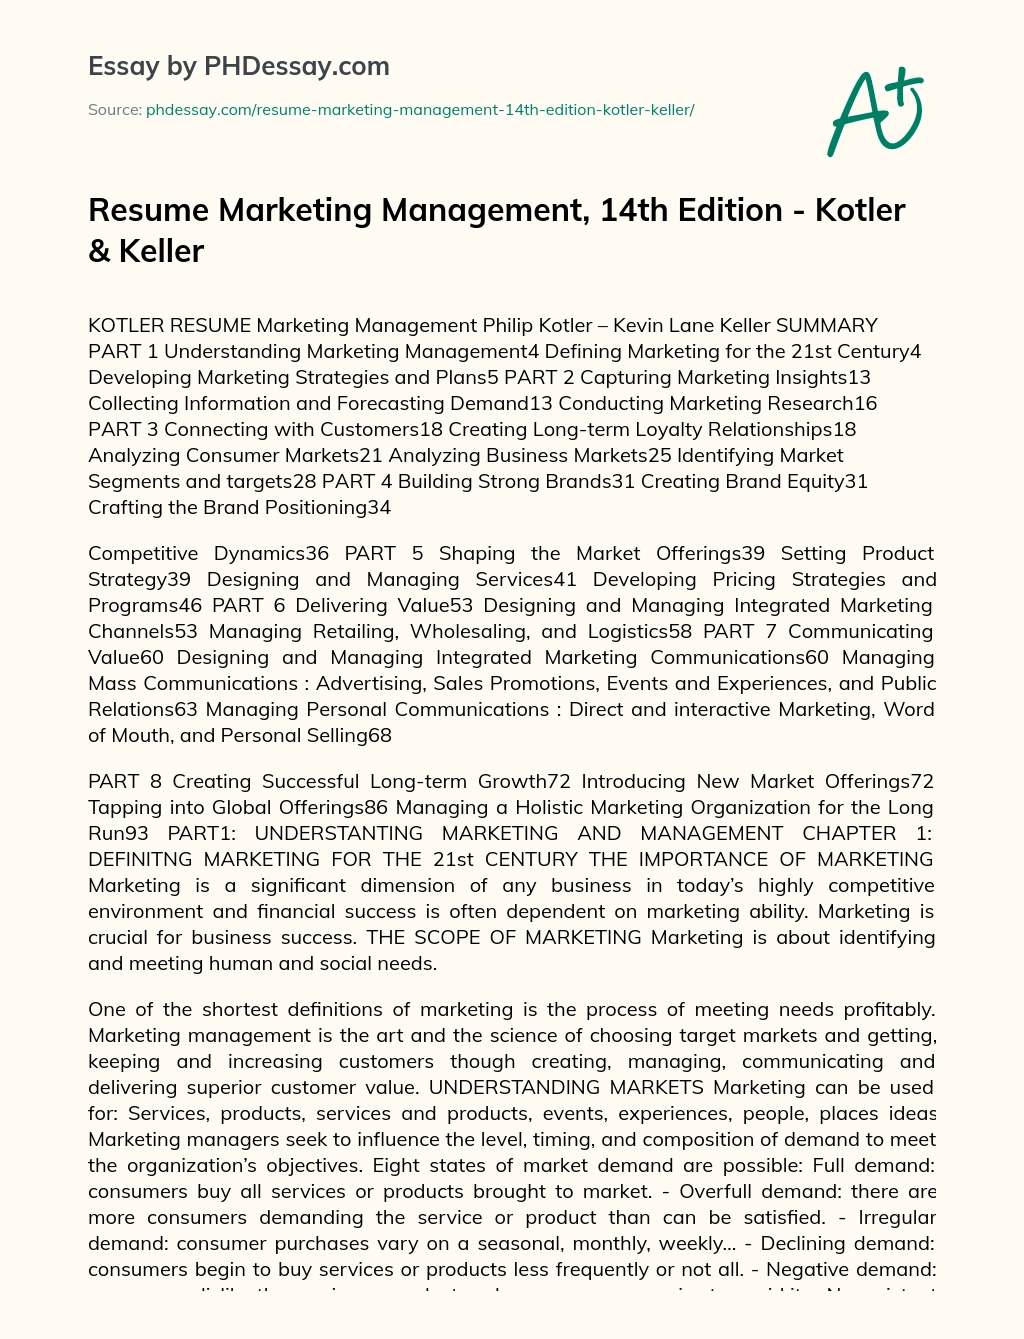 Resume Marketing Management, 14th Edition – Kotler & Keller essay